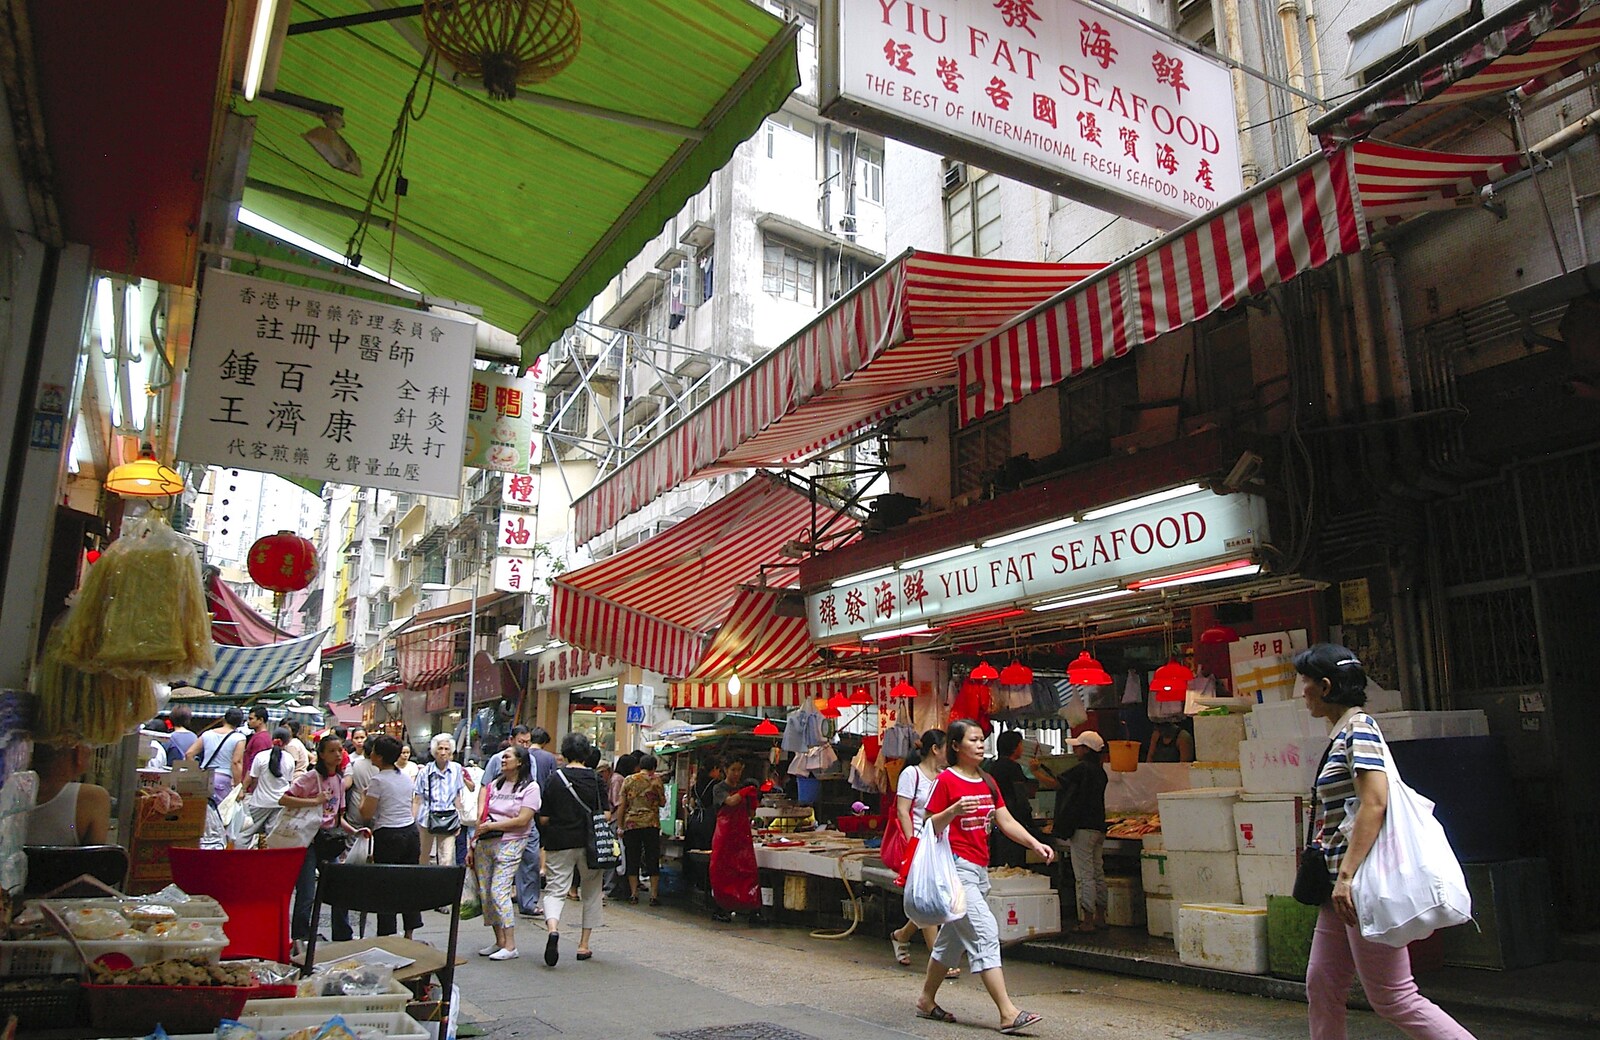 Yiu Fat Seafood from Lan Kwai Fong Market, Hong Kong, China - 4th October 2006